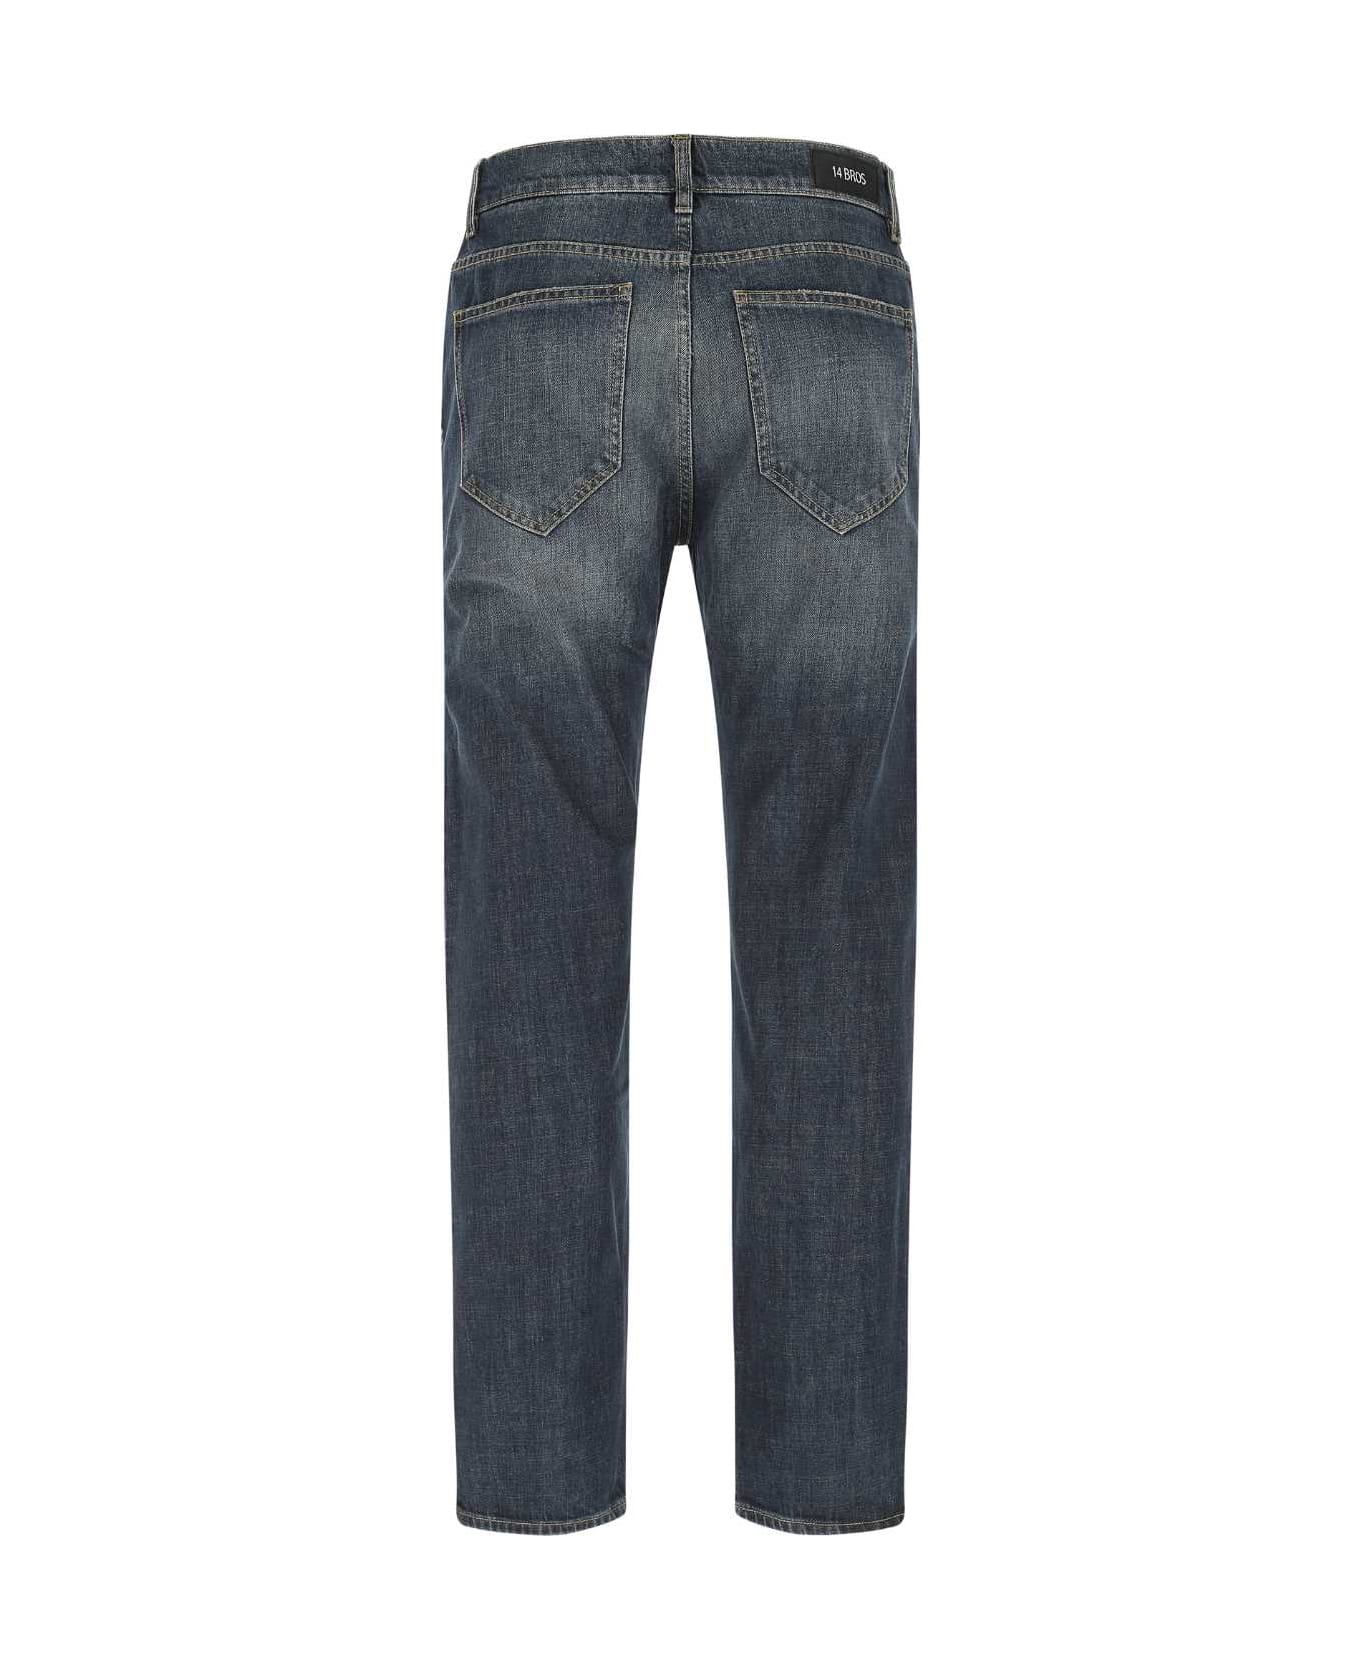 14 Bros Denim Cheswick Jeans - 9149 デニム